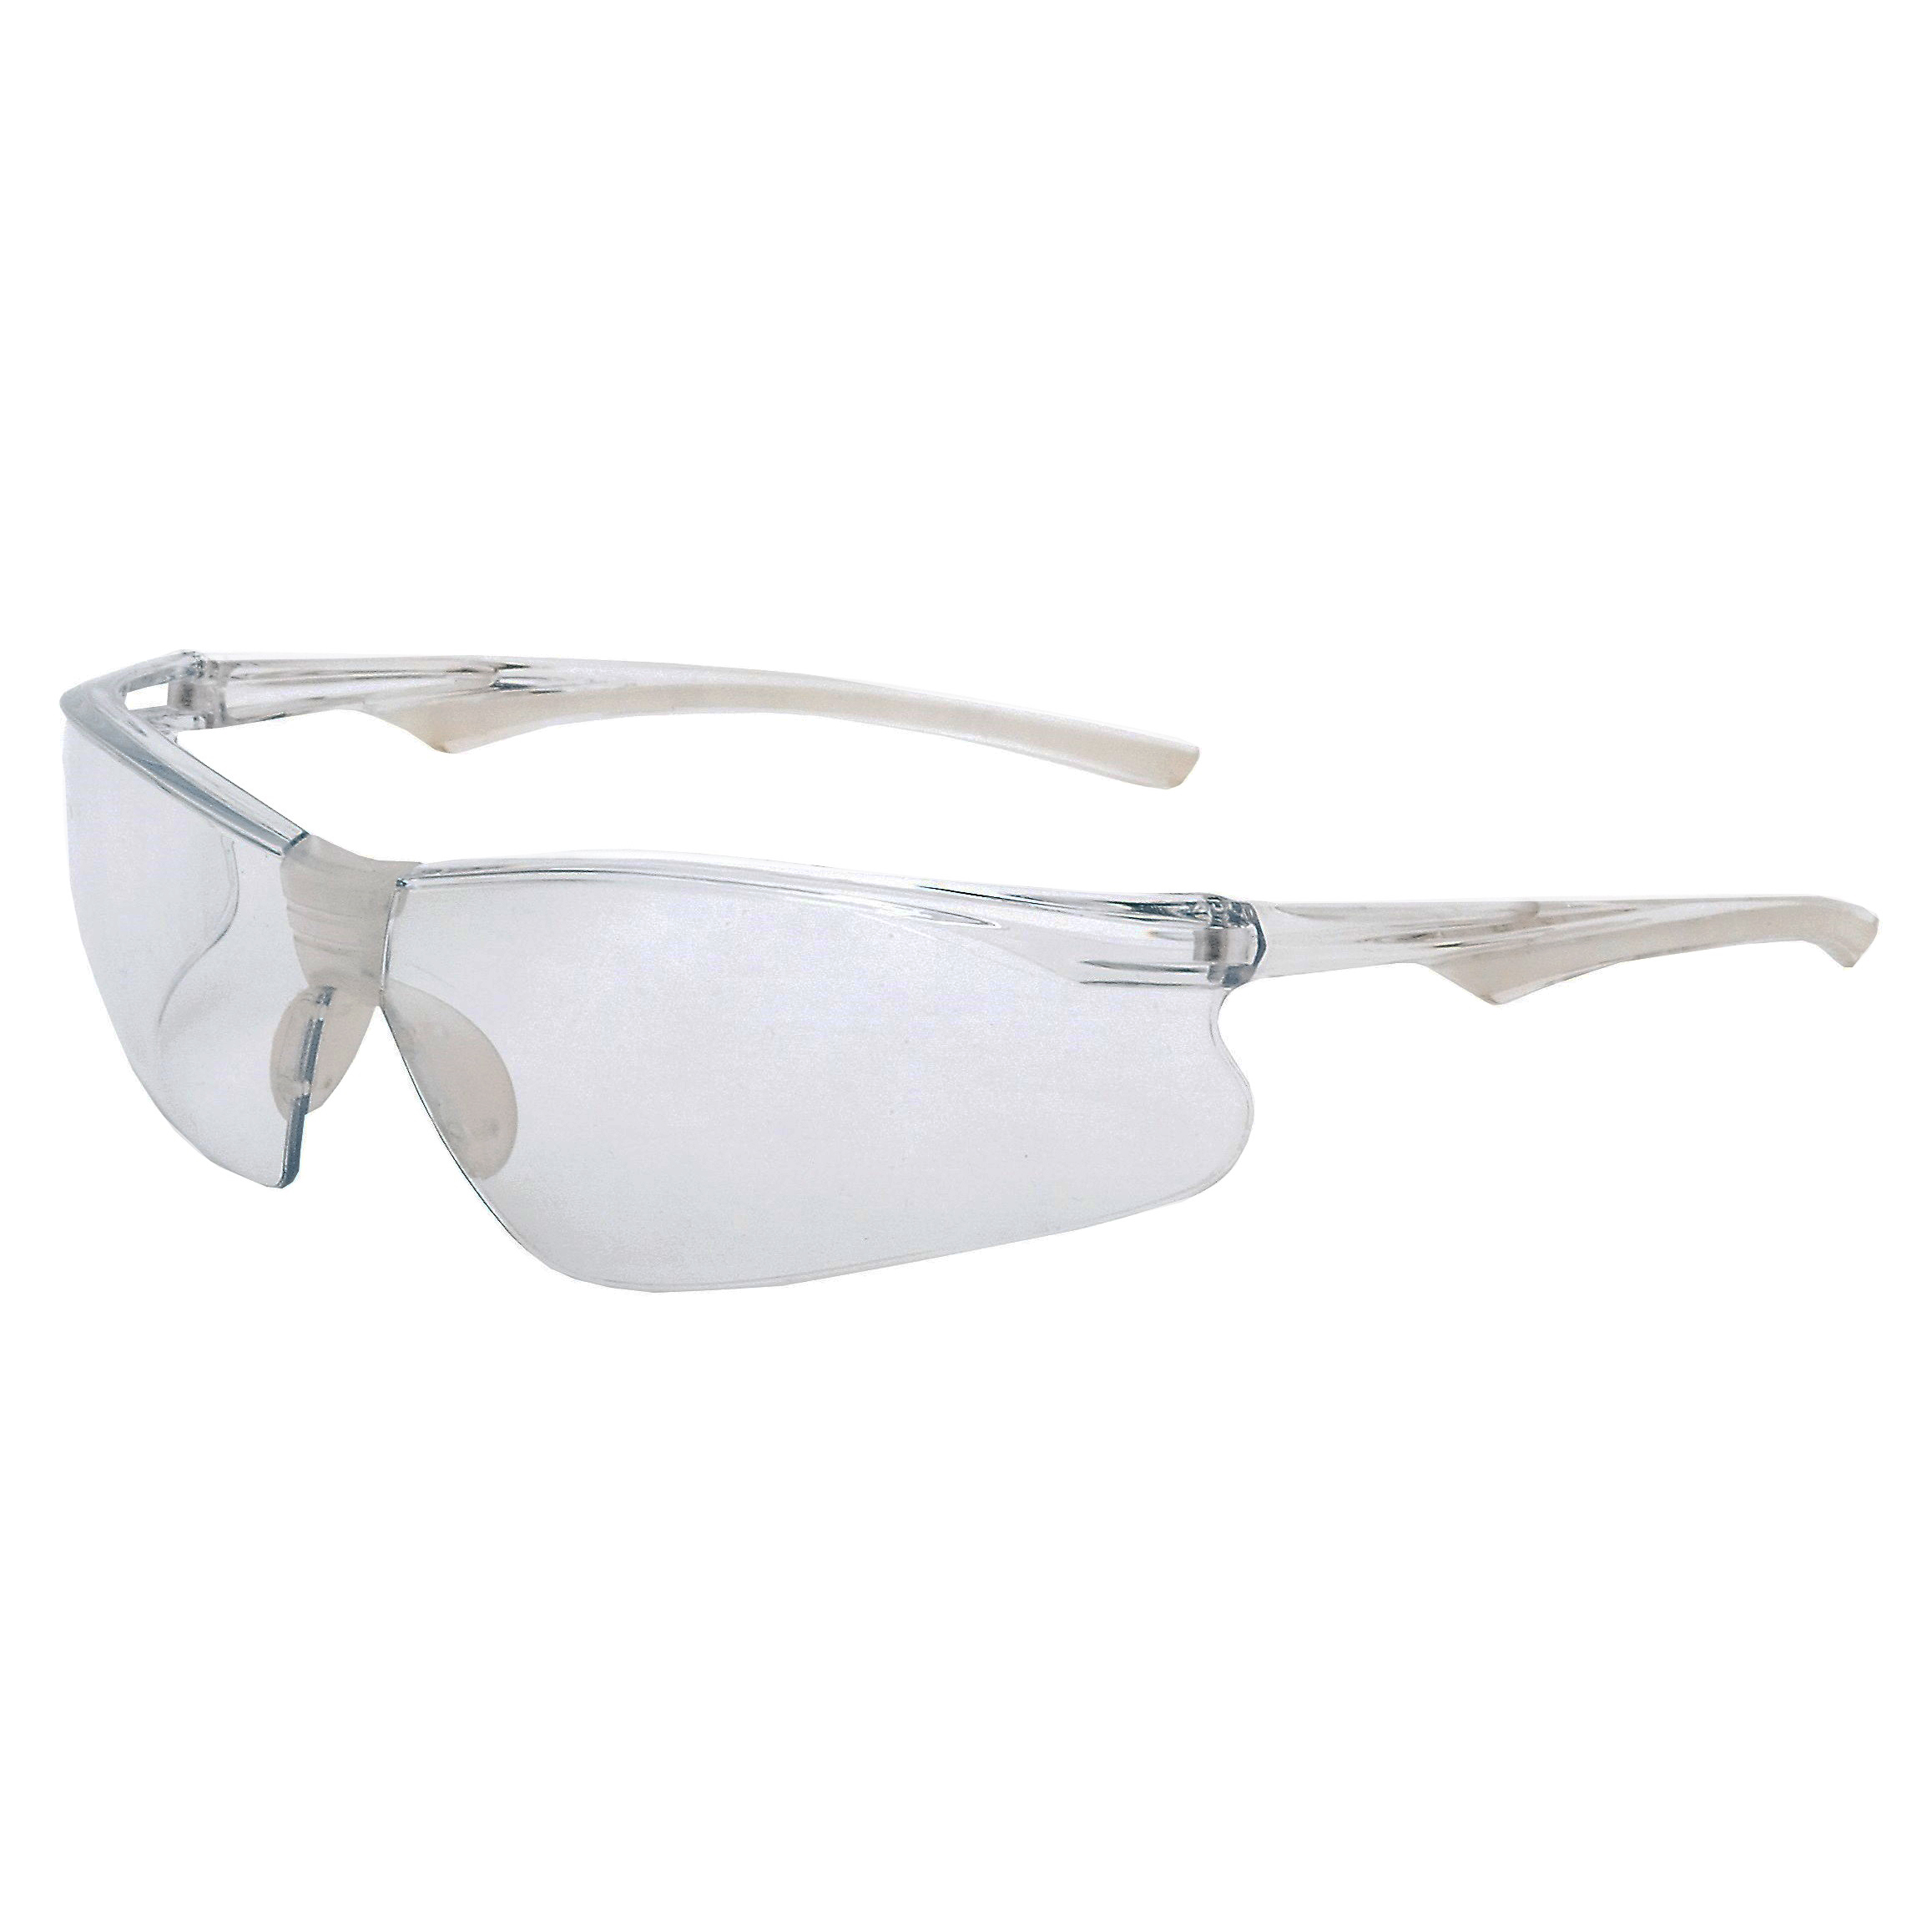 Rivet Safety Glasses, Fog Free Clear Lens